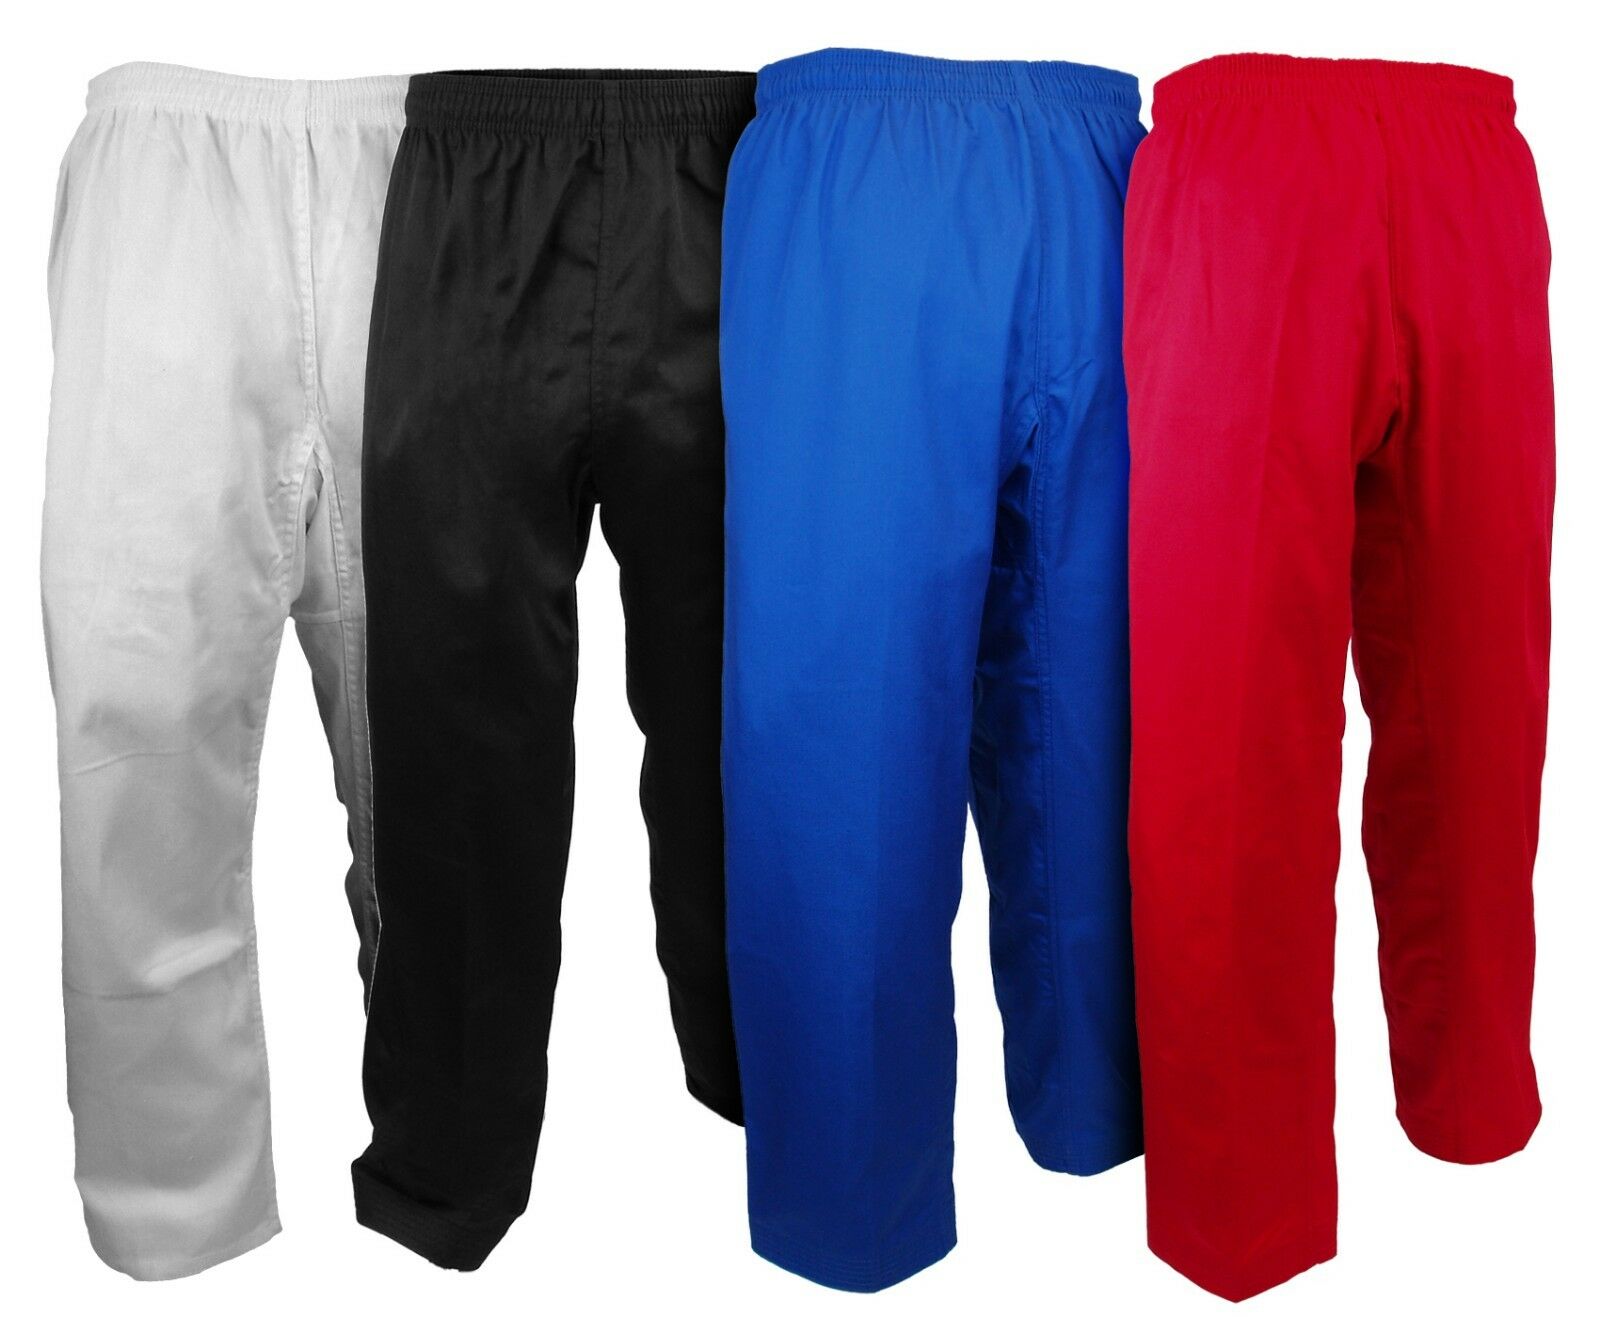 New Karate Taekwondo Pants Martial Arts Uniform Adult Child White/black/red/blue